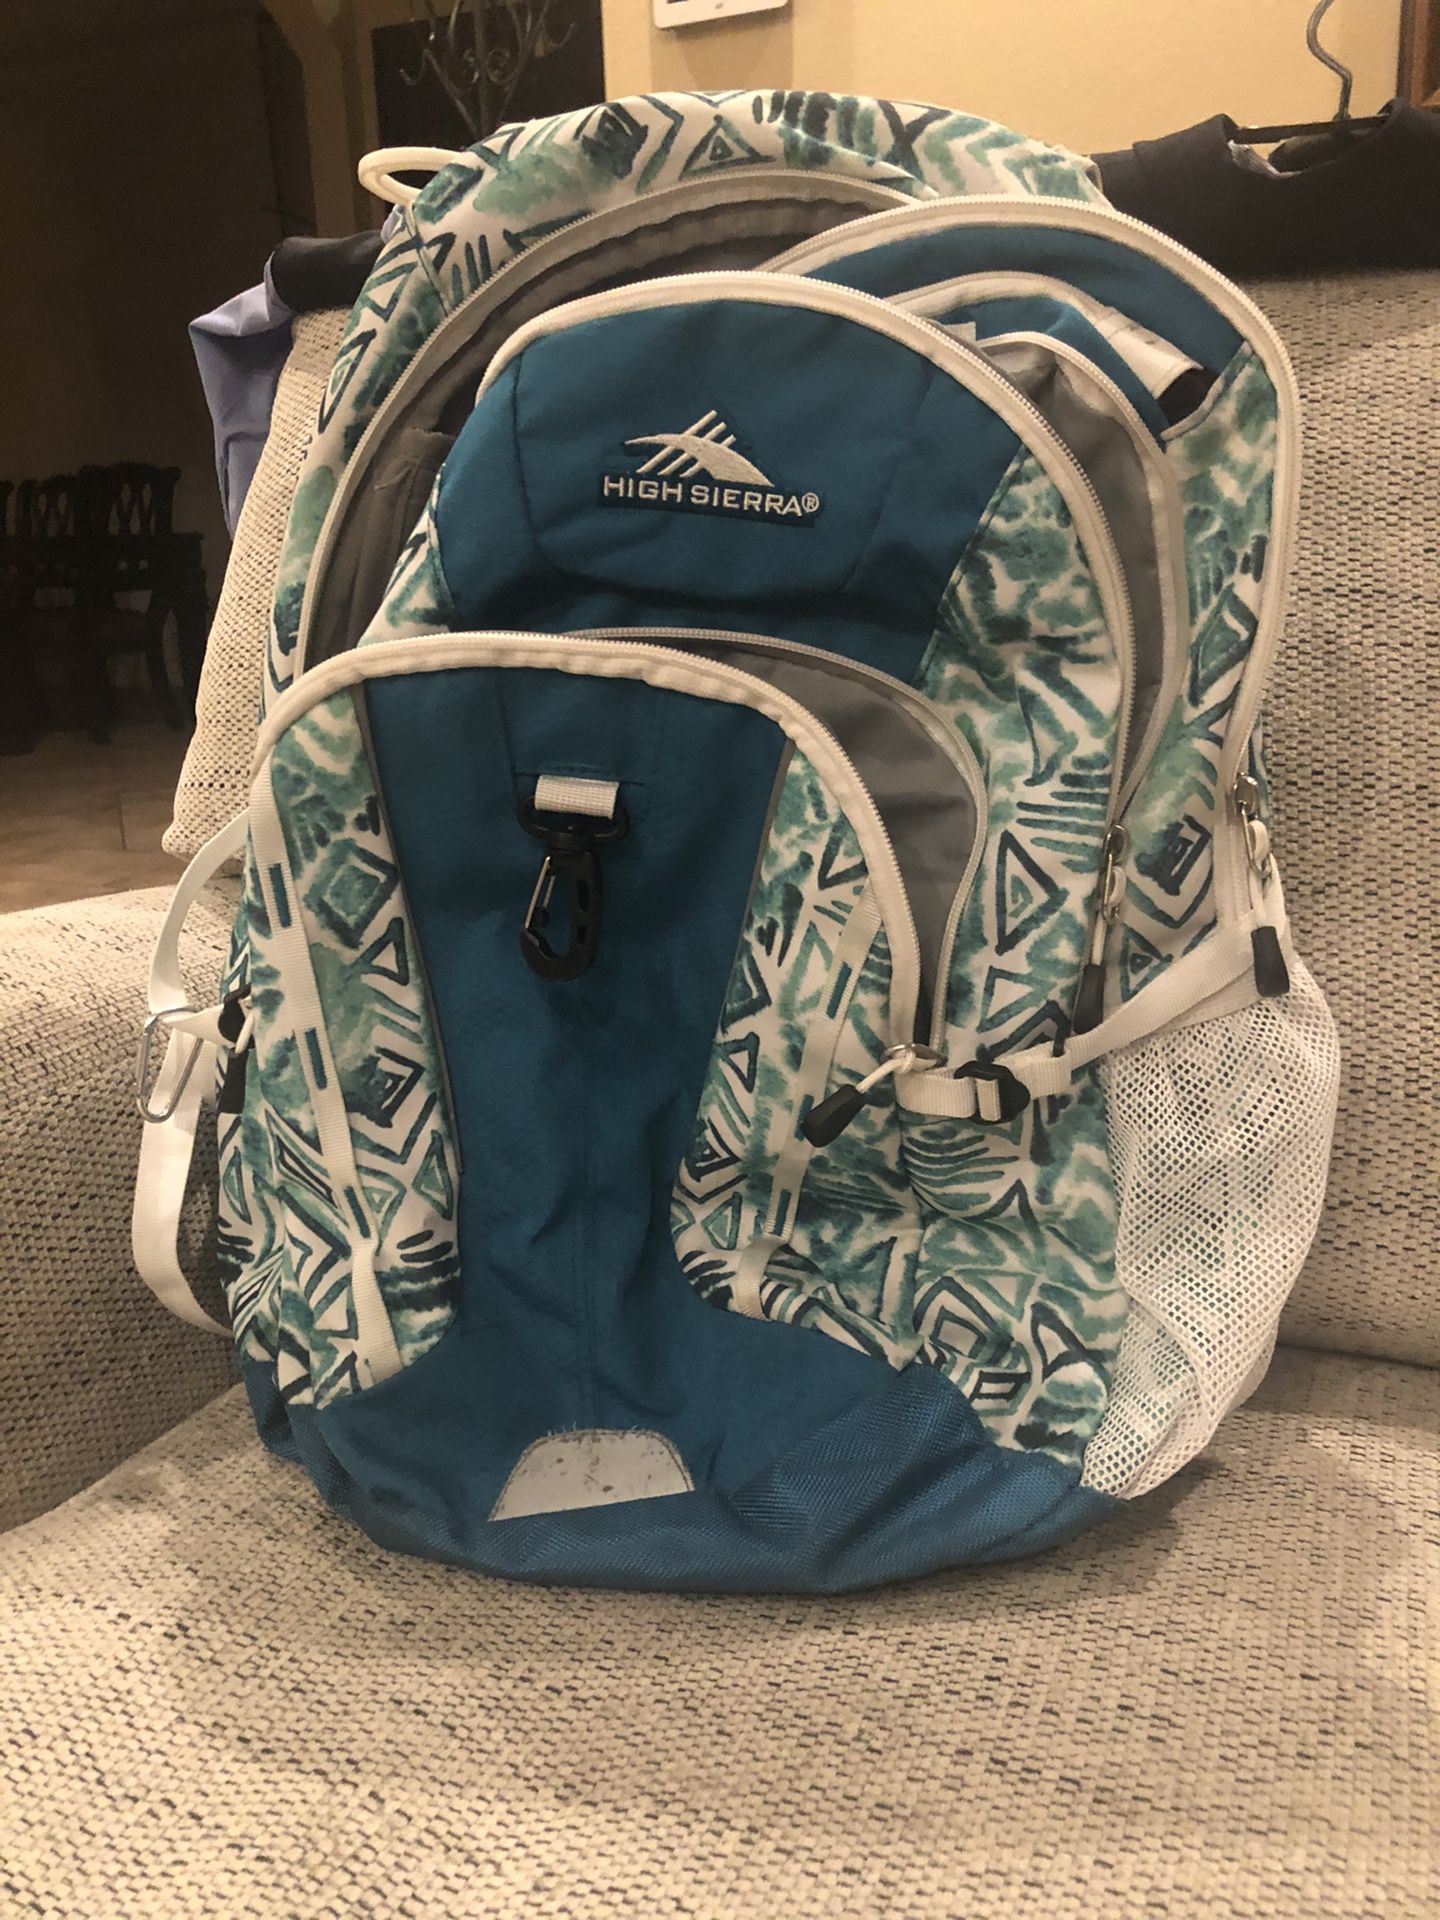 Backpacks and soccer bag